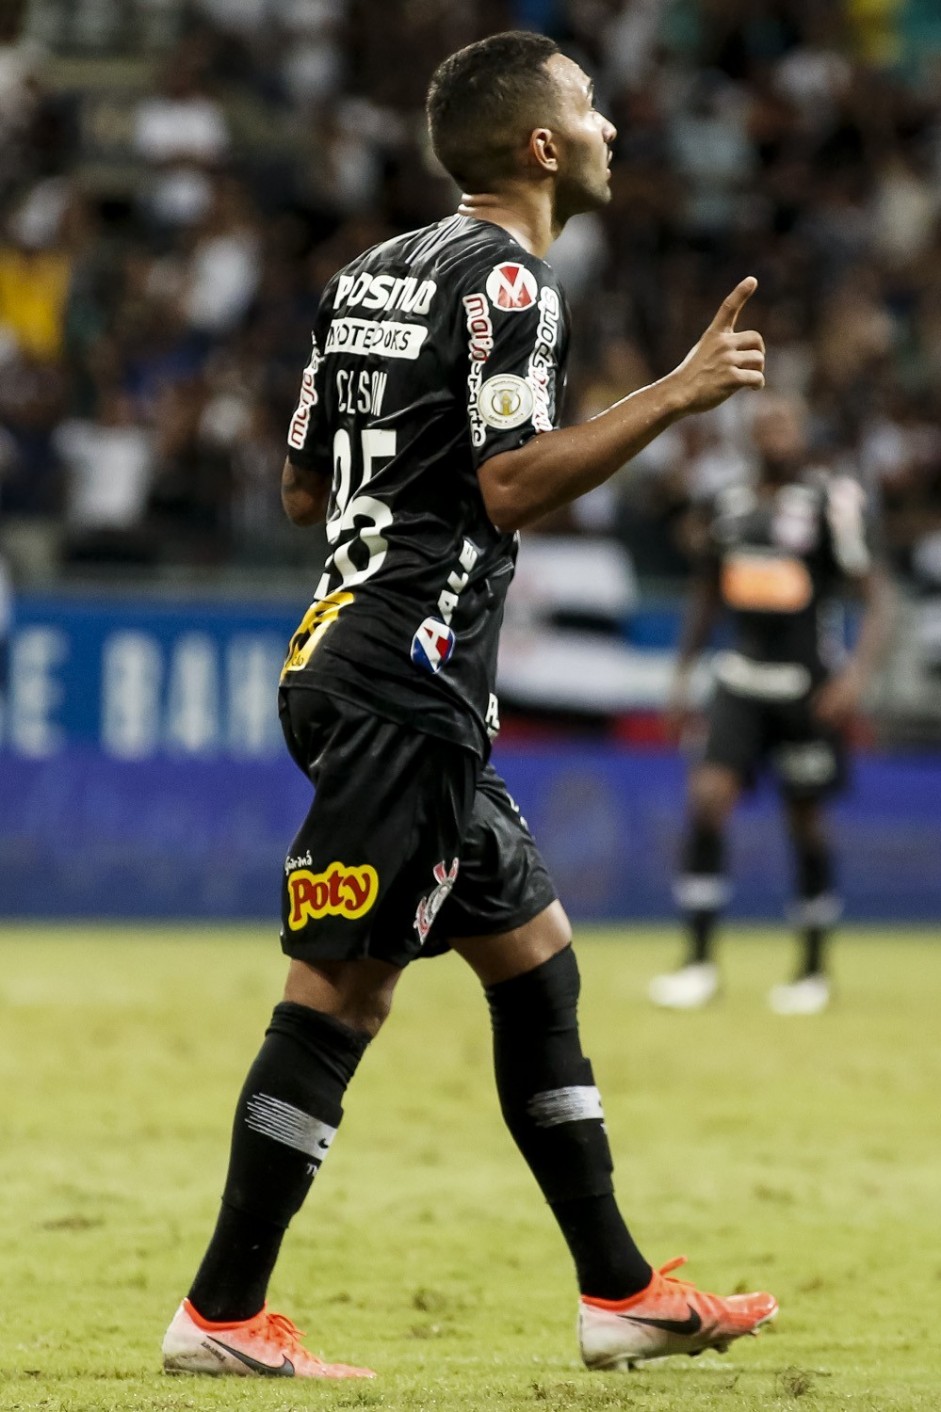 Clayson anotou o segundo e ltimo gol do Corinthians contra o Bahia, pela estreia do Brasileiro